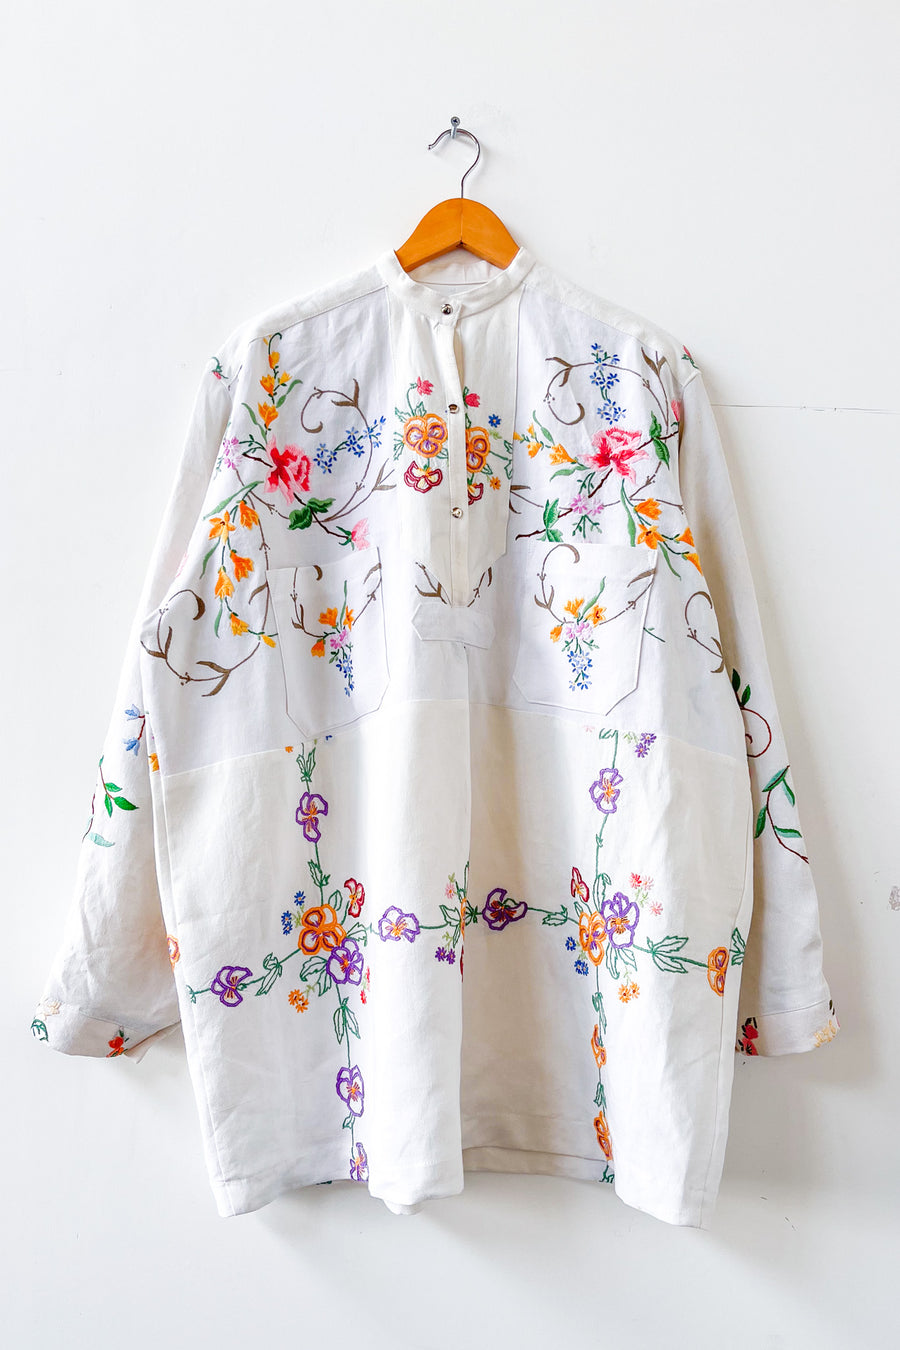 Margo Hand Embroidered Linen Dress